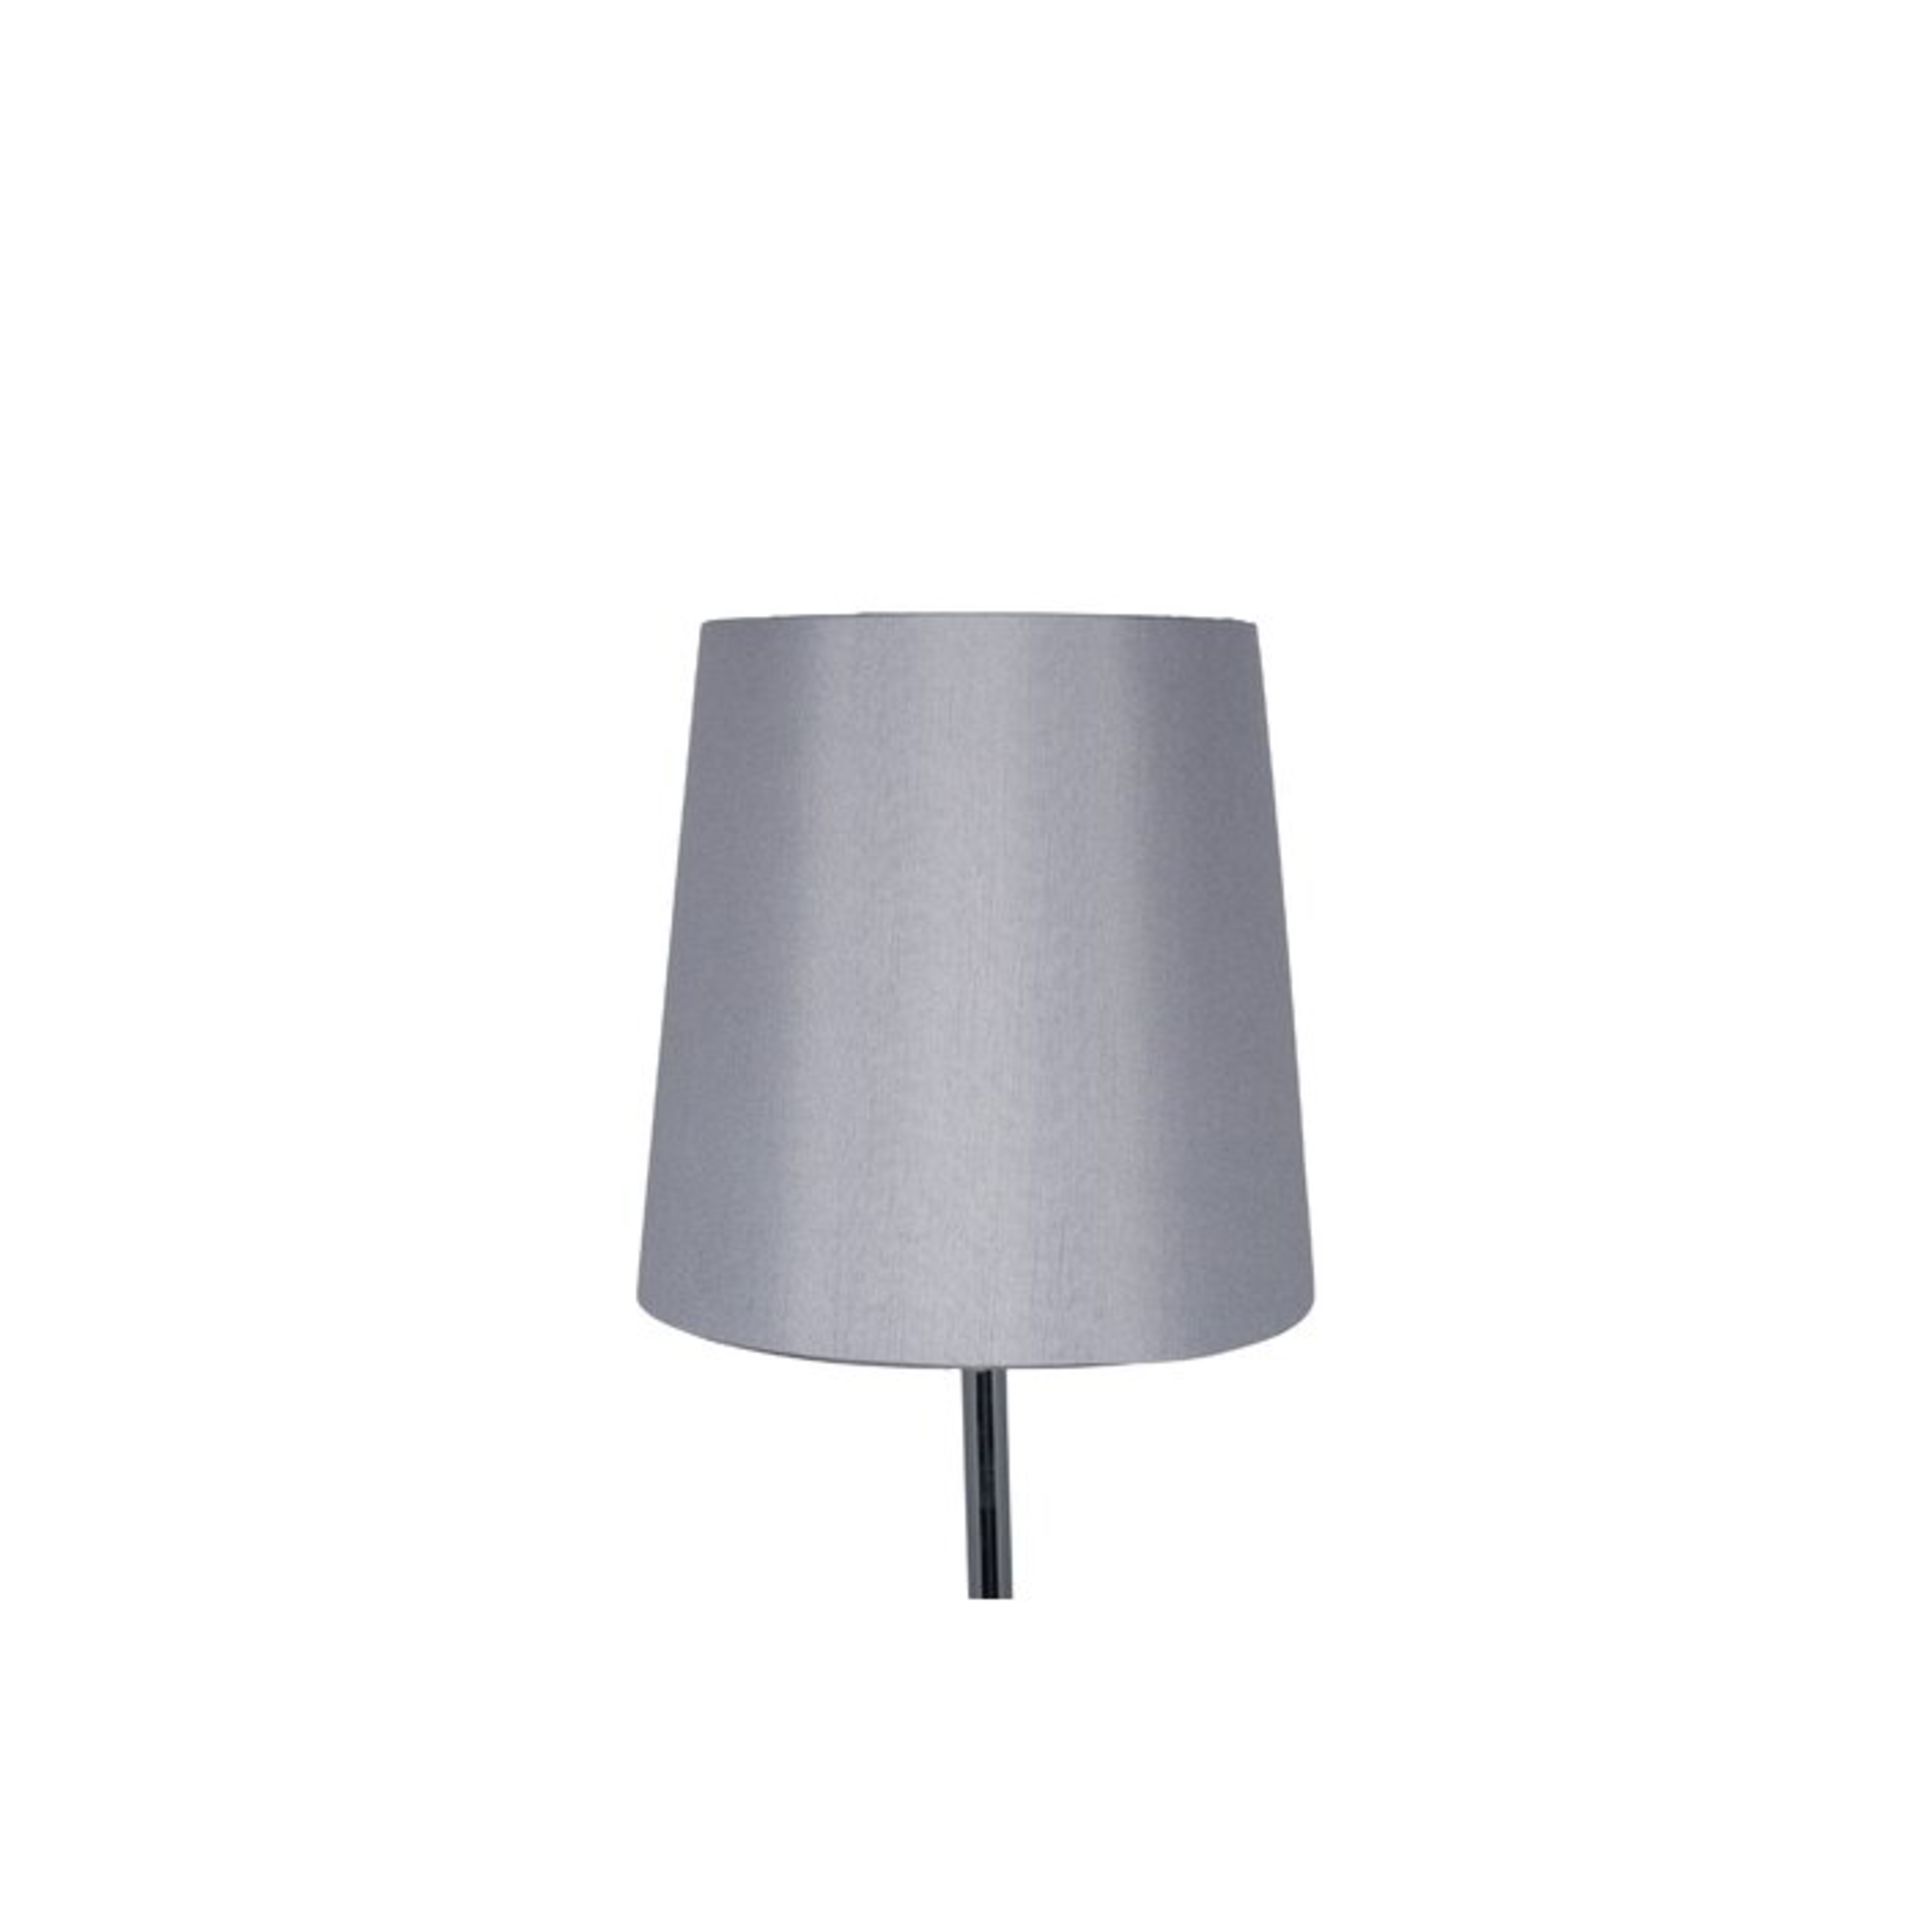 x2 Ellipse 40.5cm Silk Empire Lamp Shade - RRP £29.99 Per Shade - Image 2 of 2